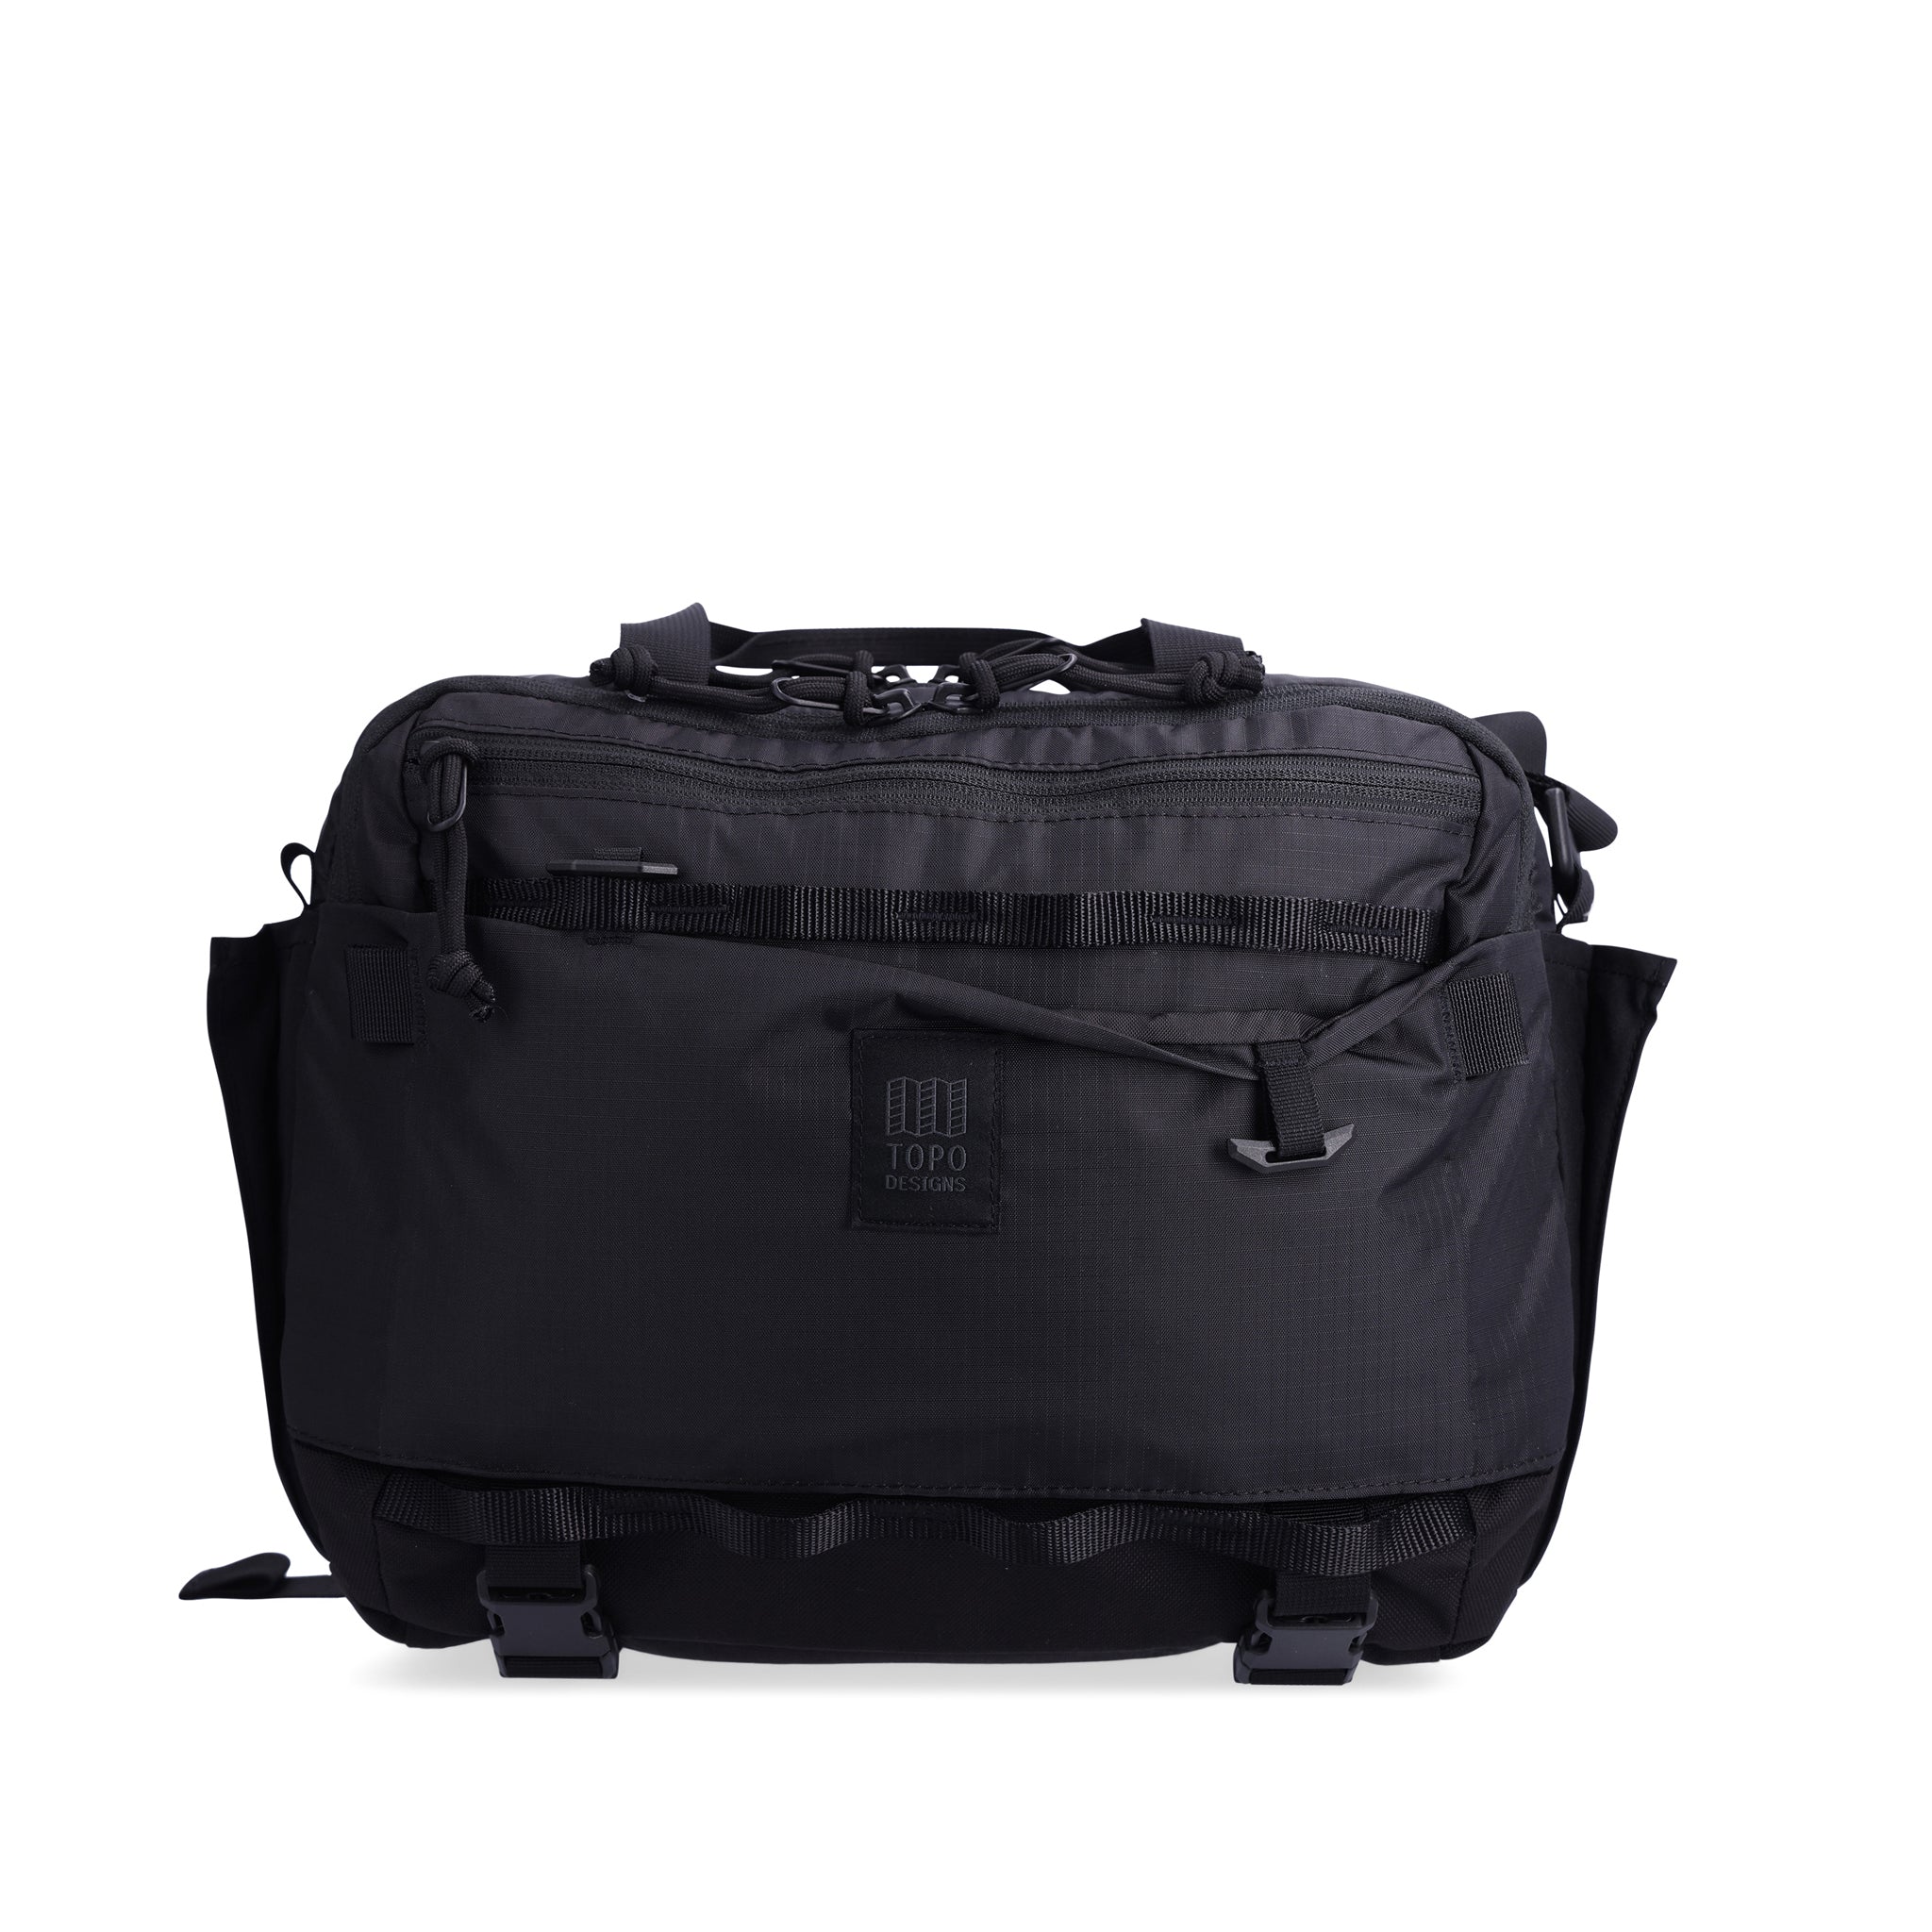 Topo Designs Mountain Cross Bag in recycled "Black" nylon.